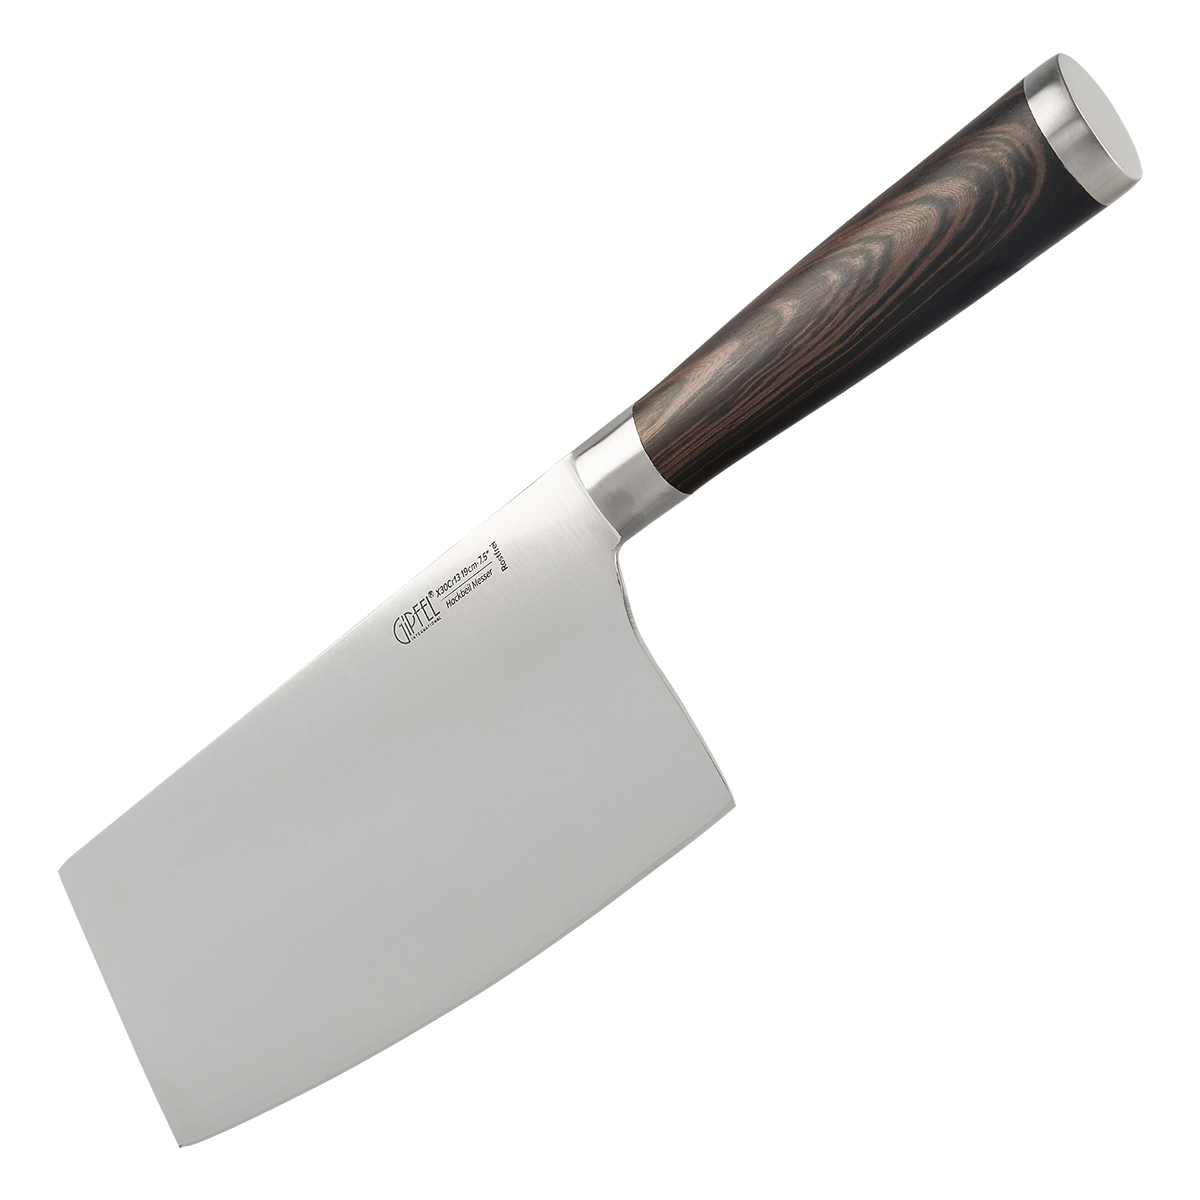 Кухонный нож-топорик Gipfel 8470 фото